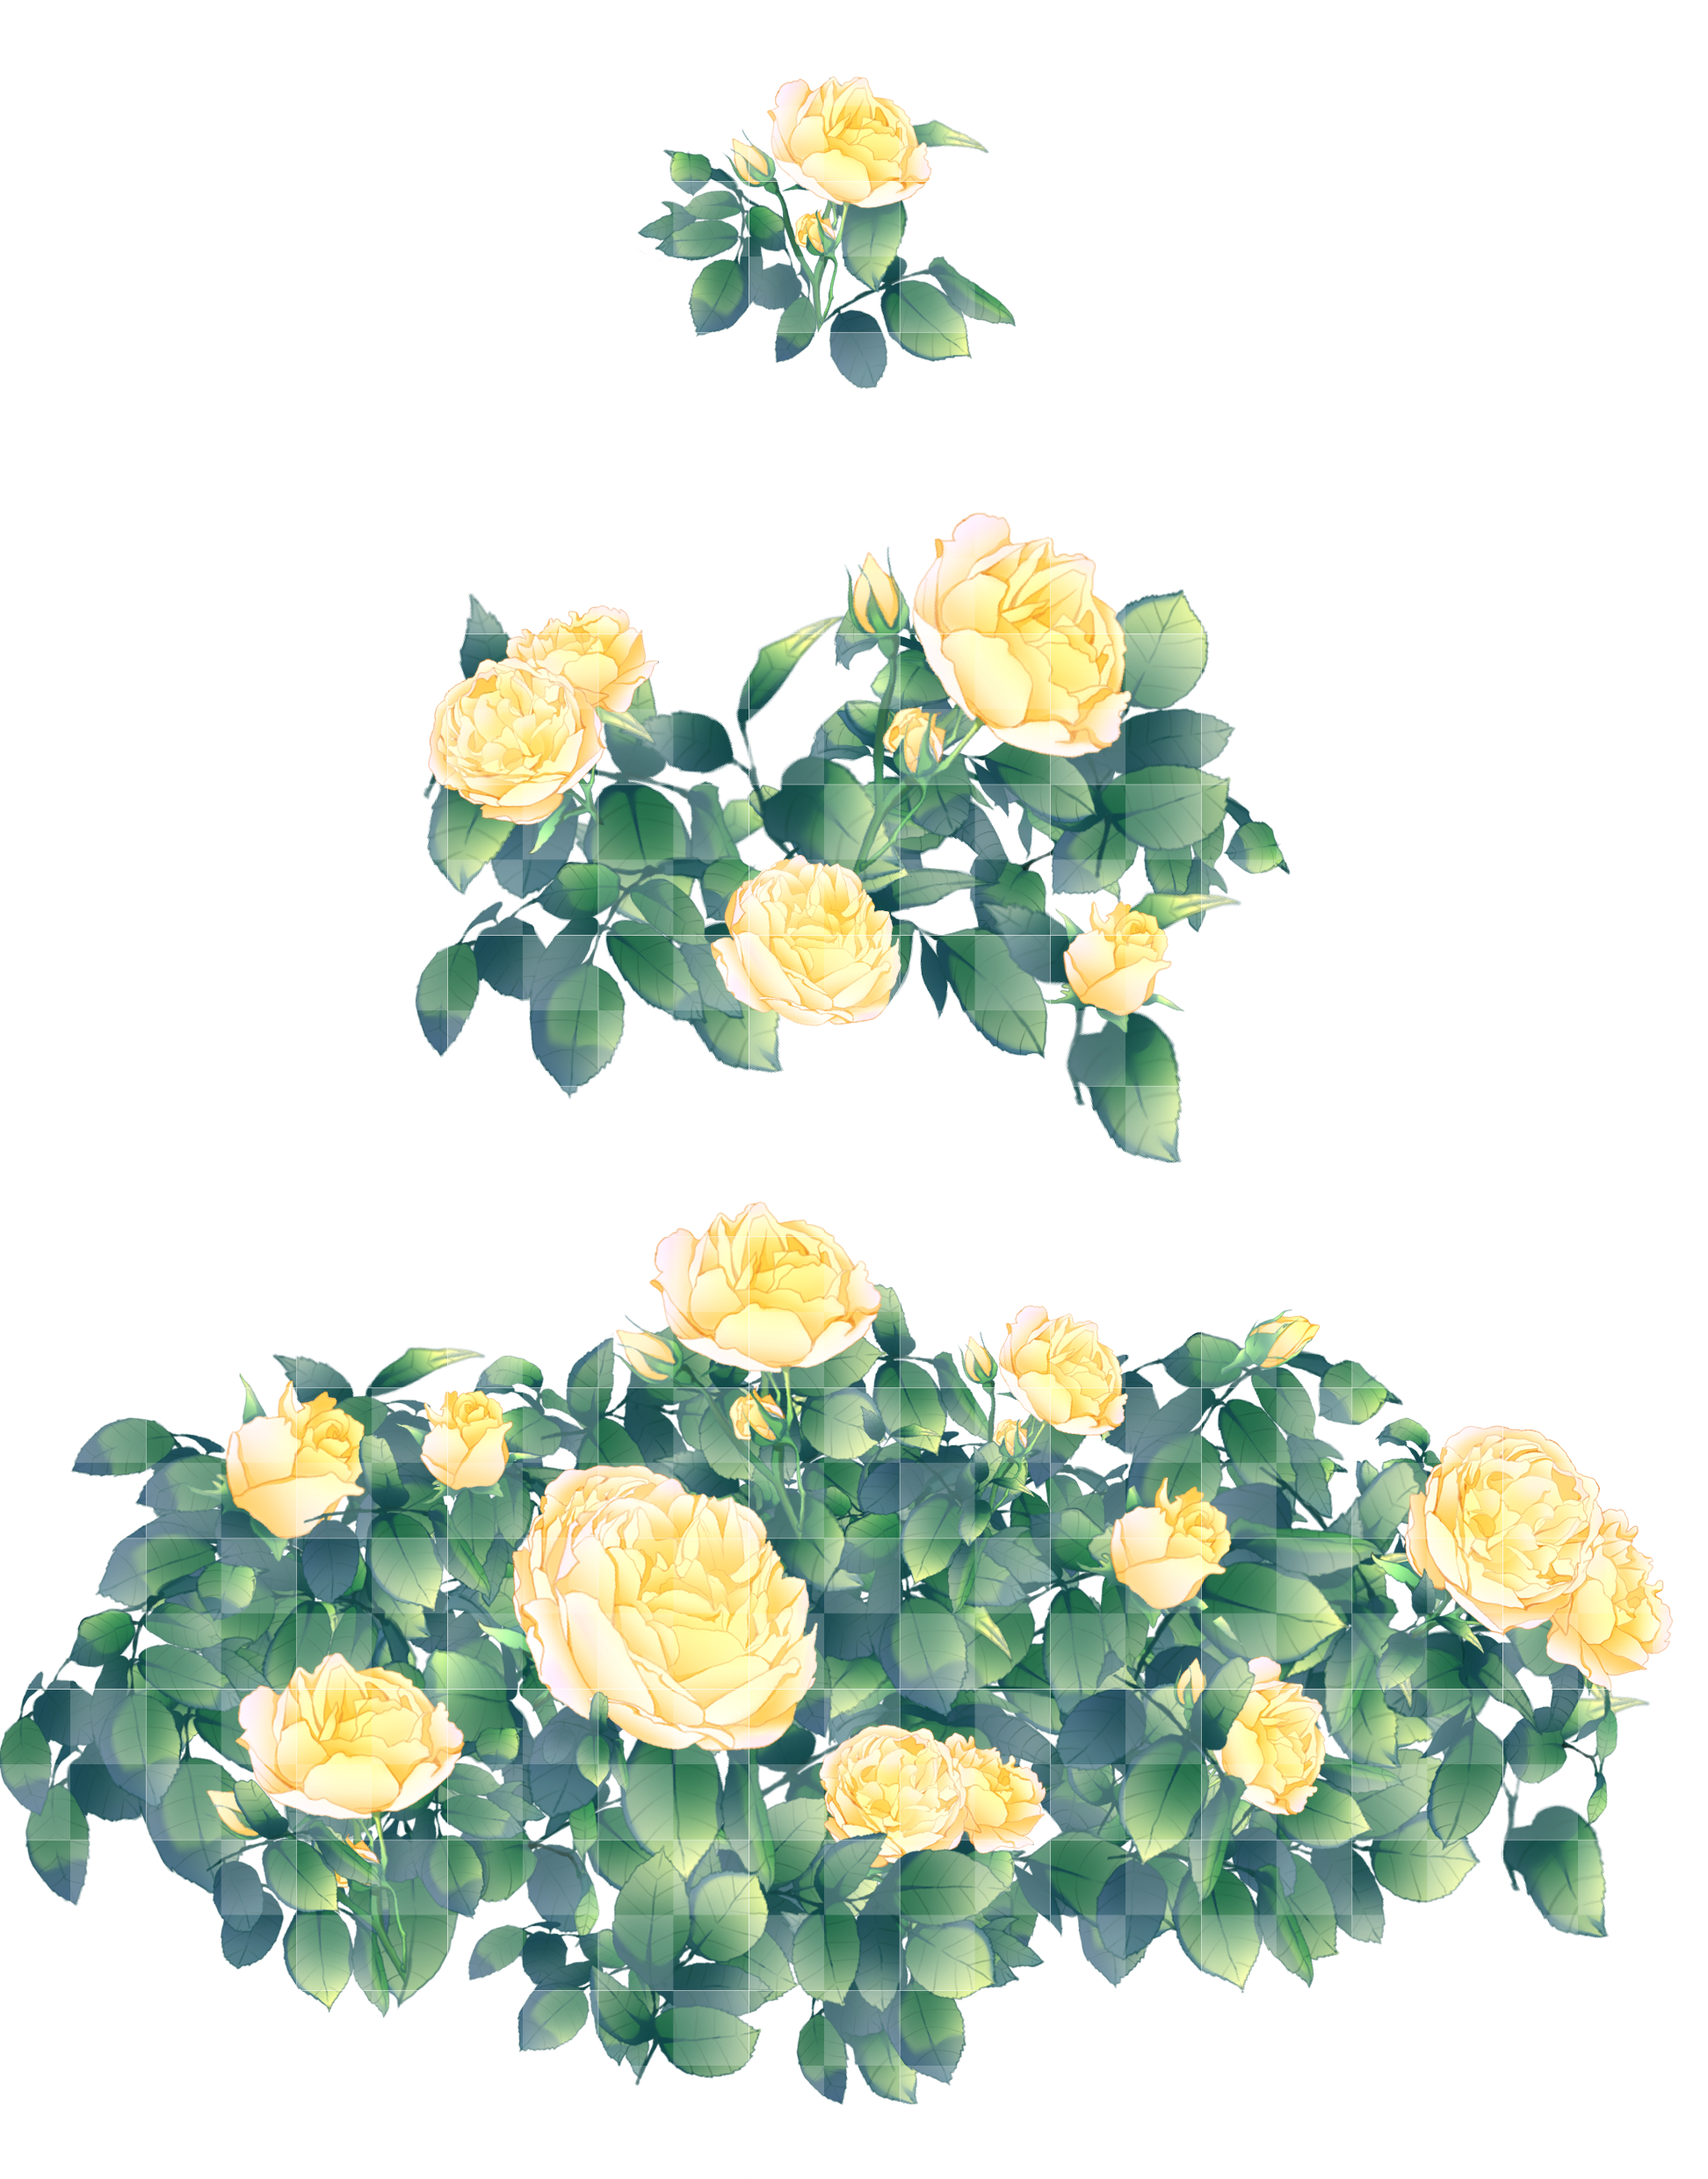 【csp笔刷-素材—黄色蔷薇花